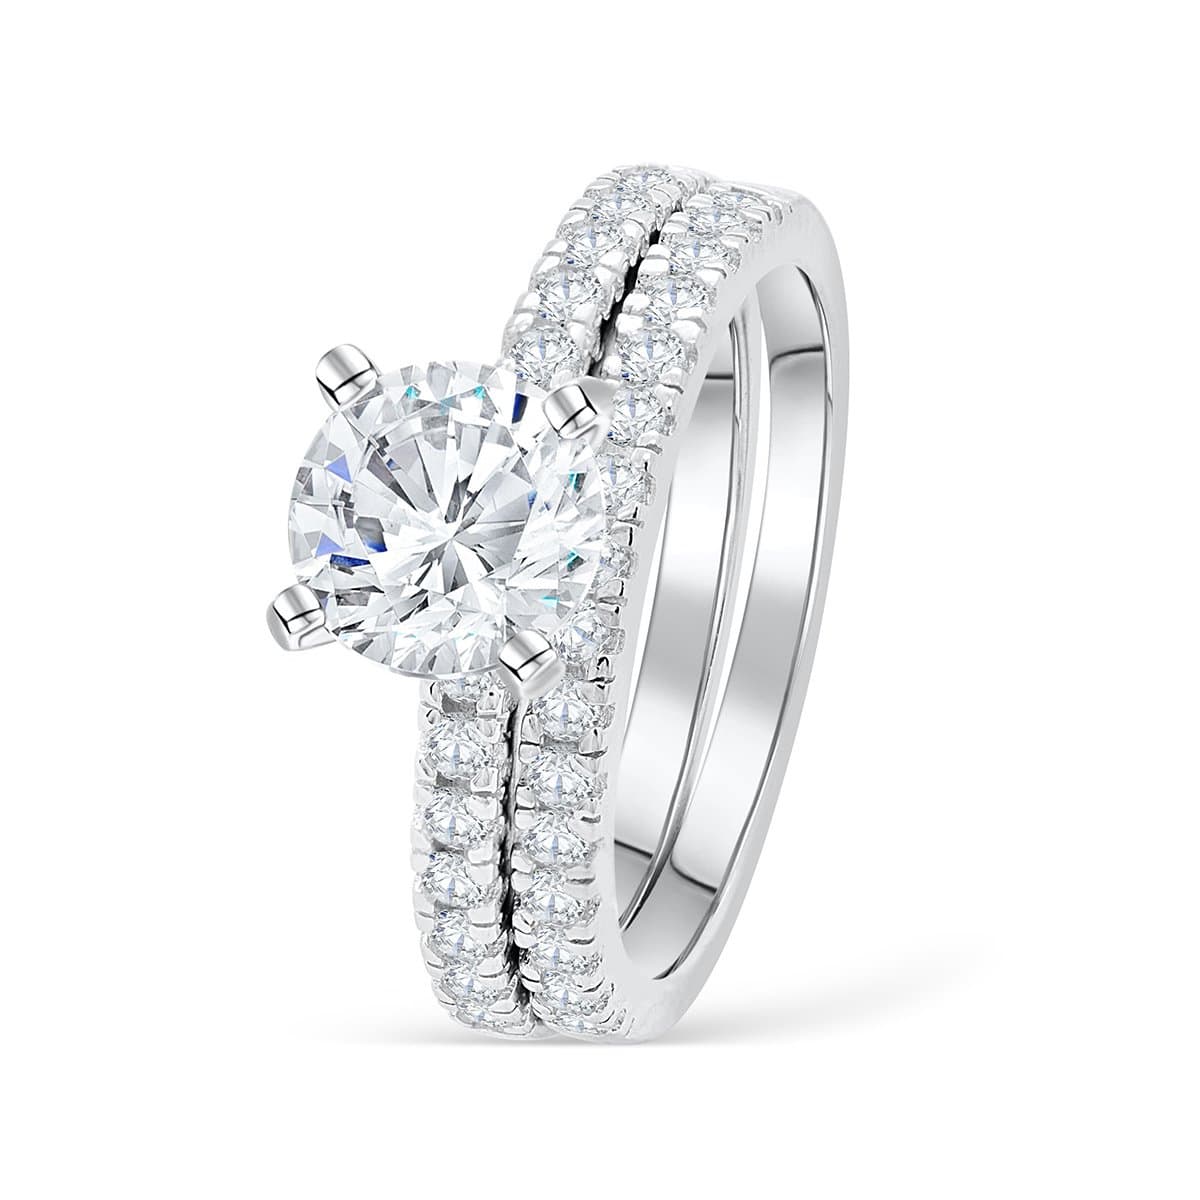 the star light silver round cut wedding ring set